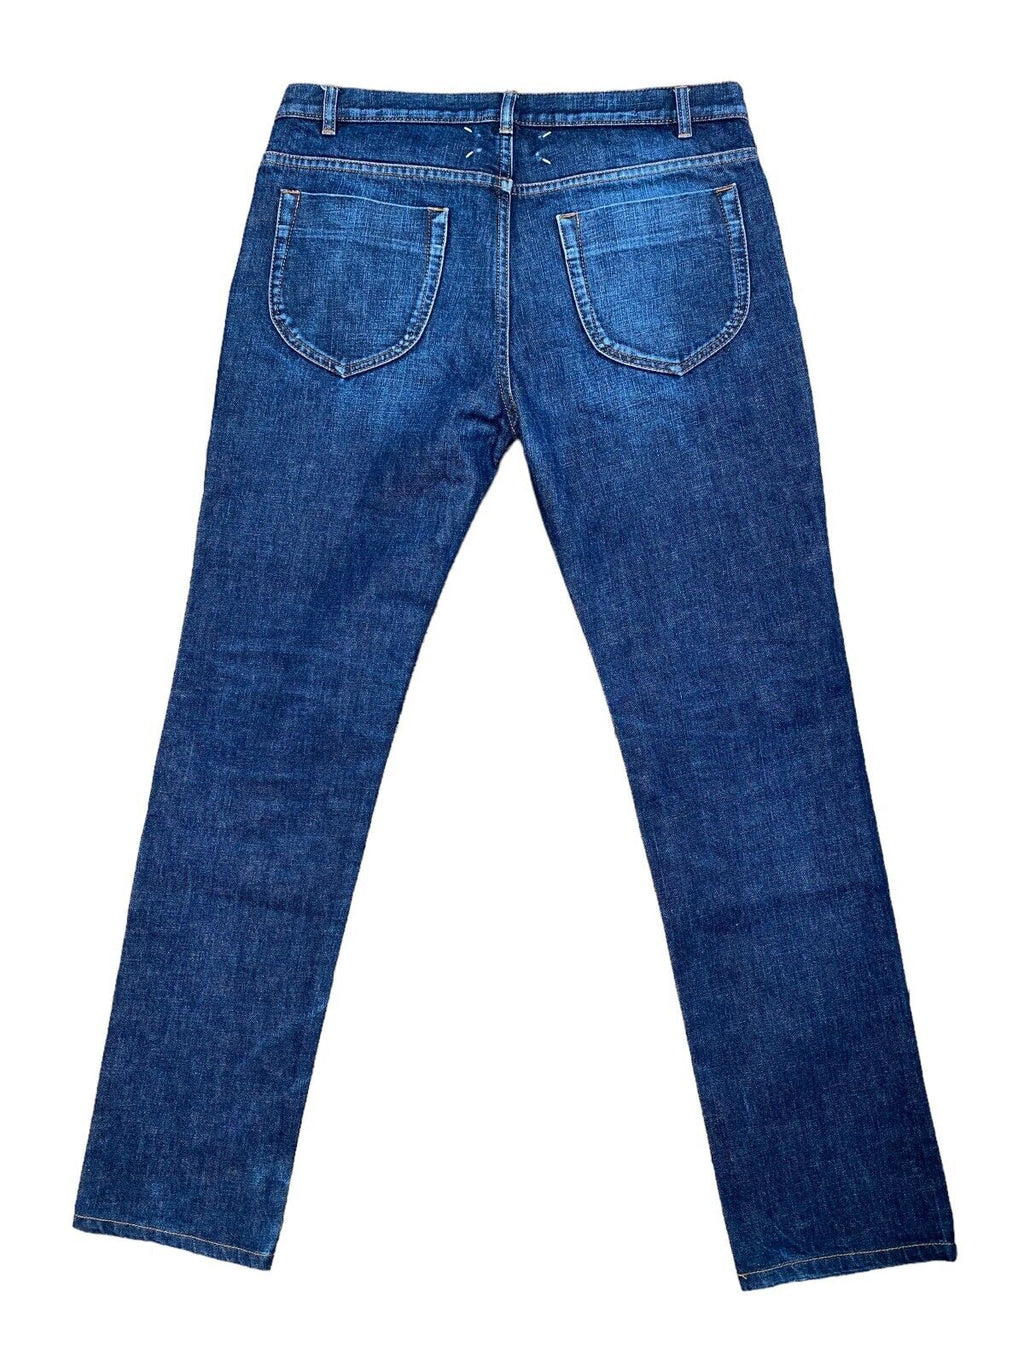 4 Stitches Blue Denim Jeans  Size 48 / US 32 Slim Fit